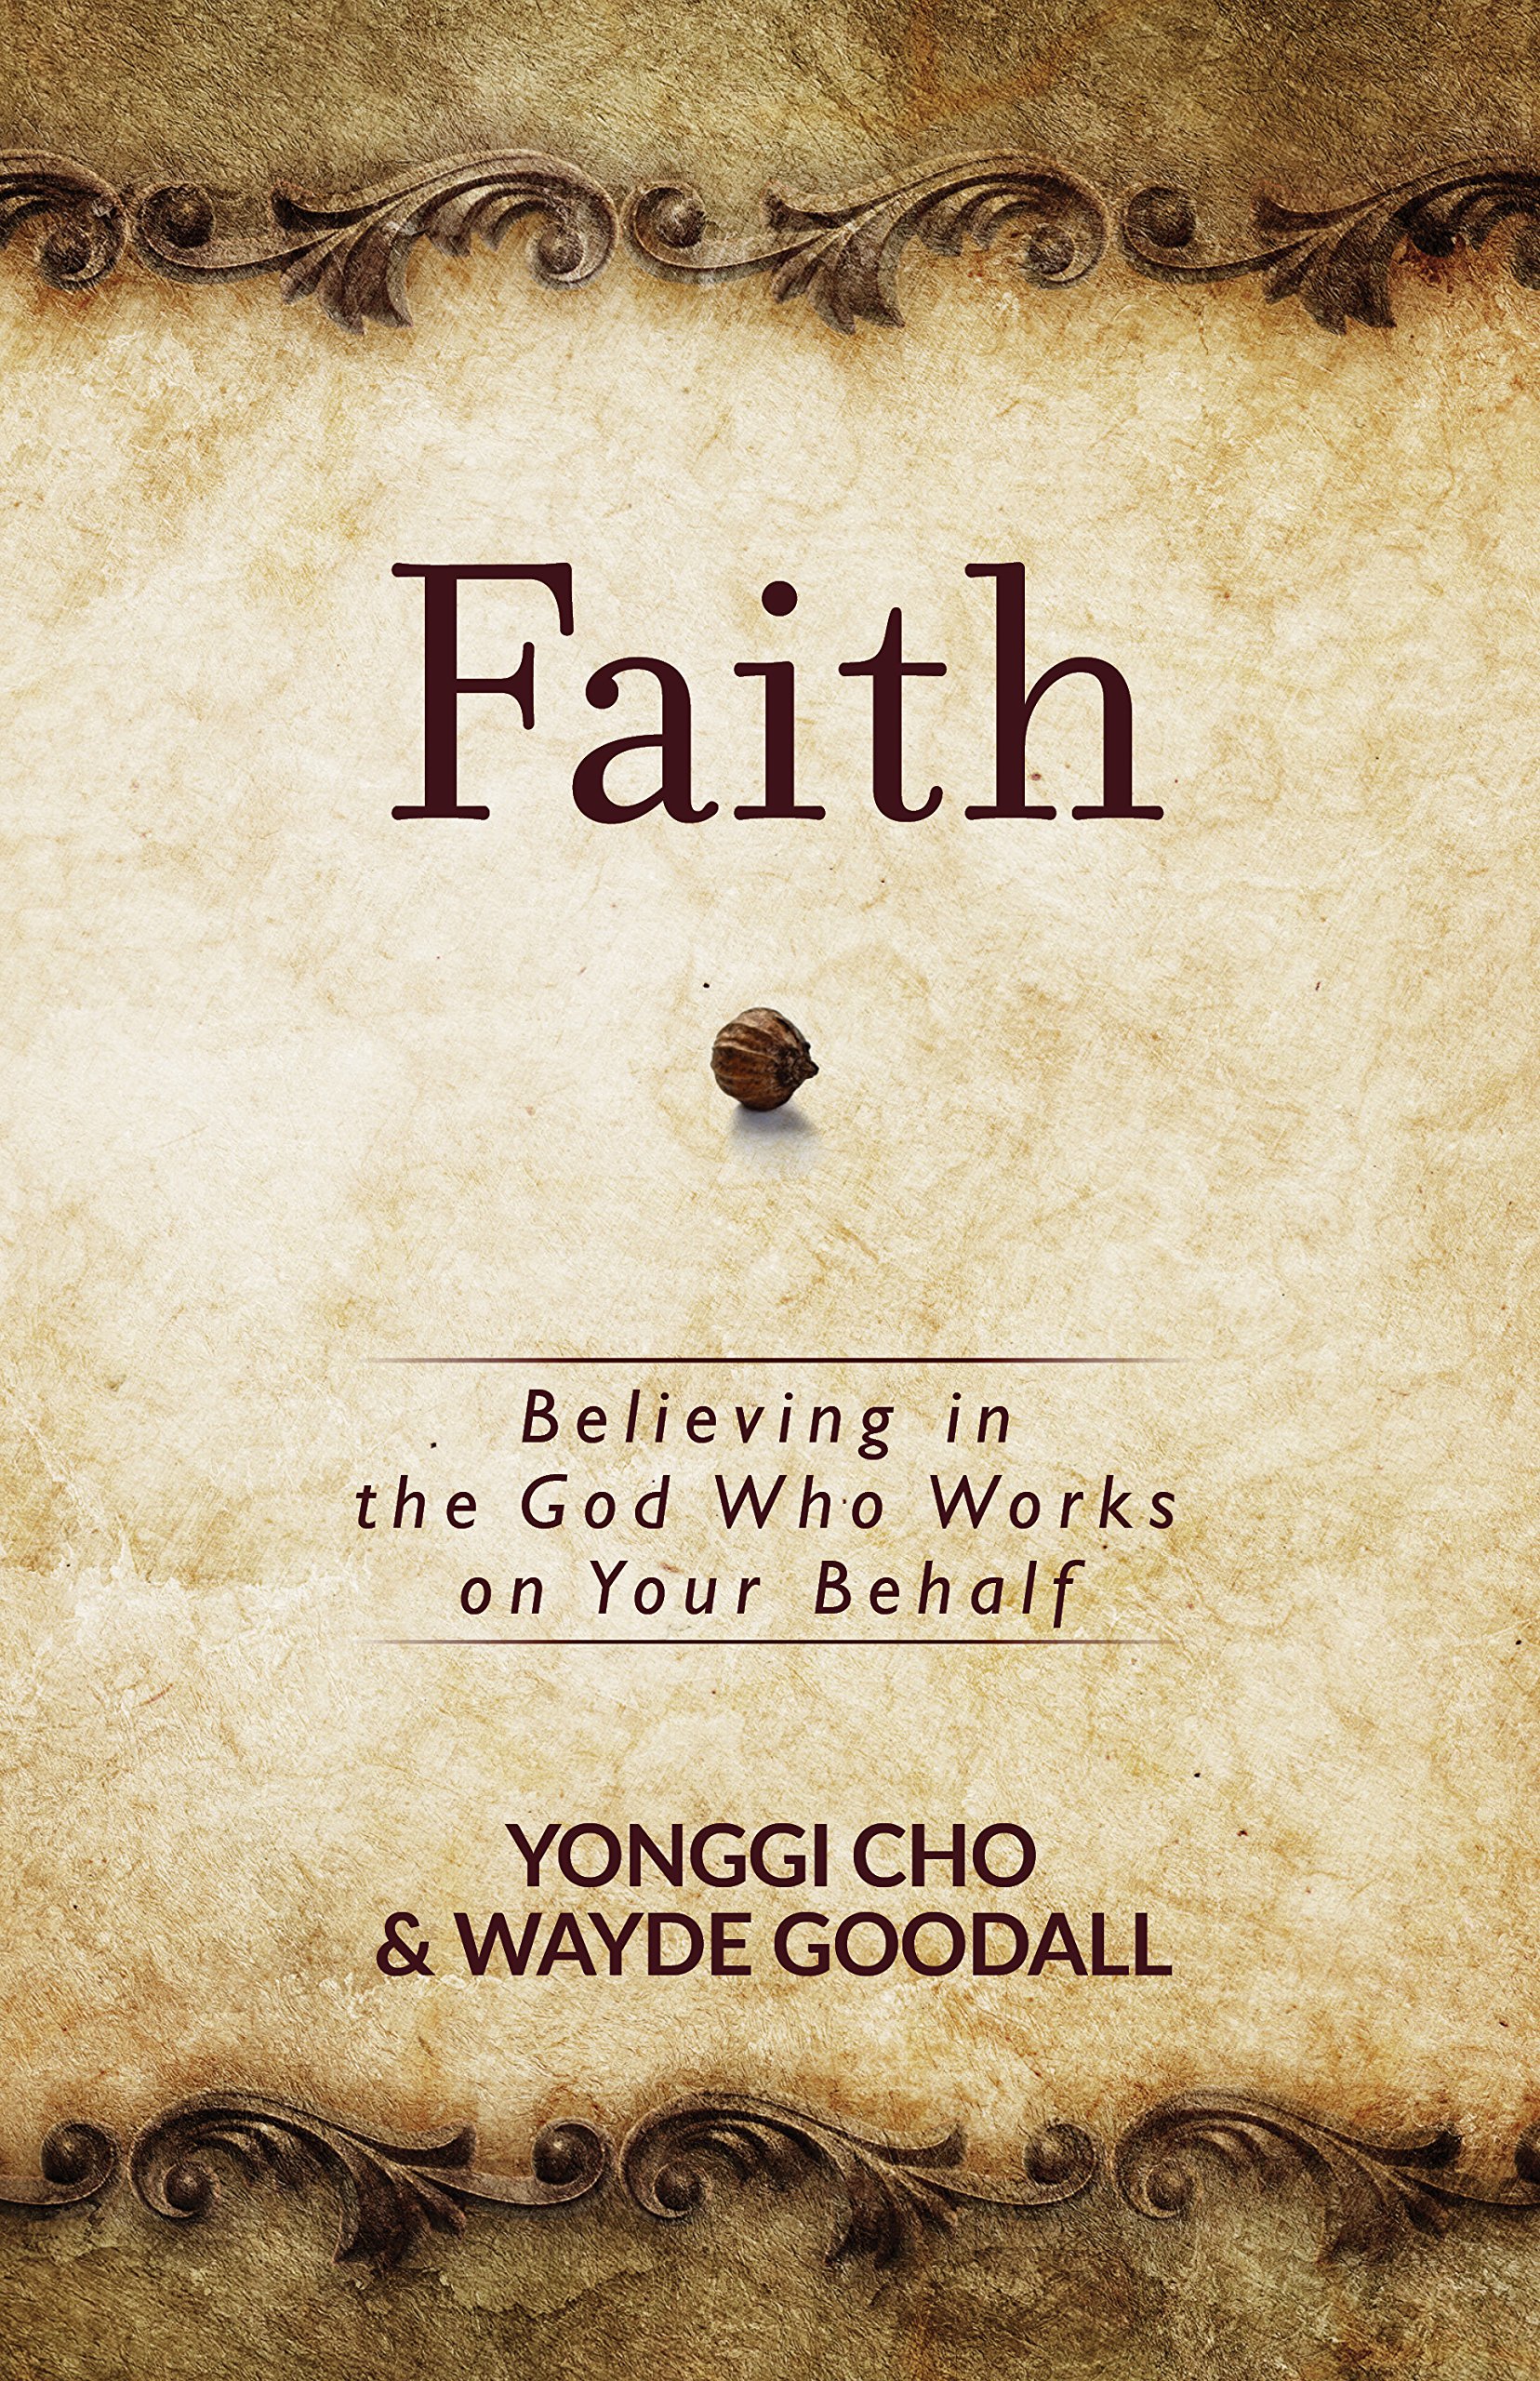 Faith by Yonggi Cho and Wayde Goodall 